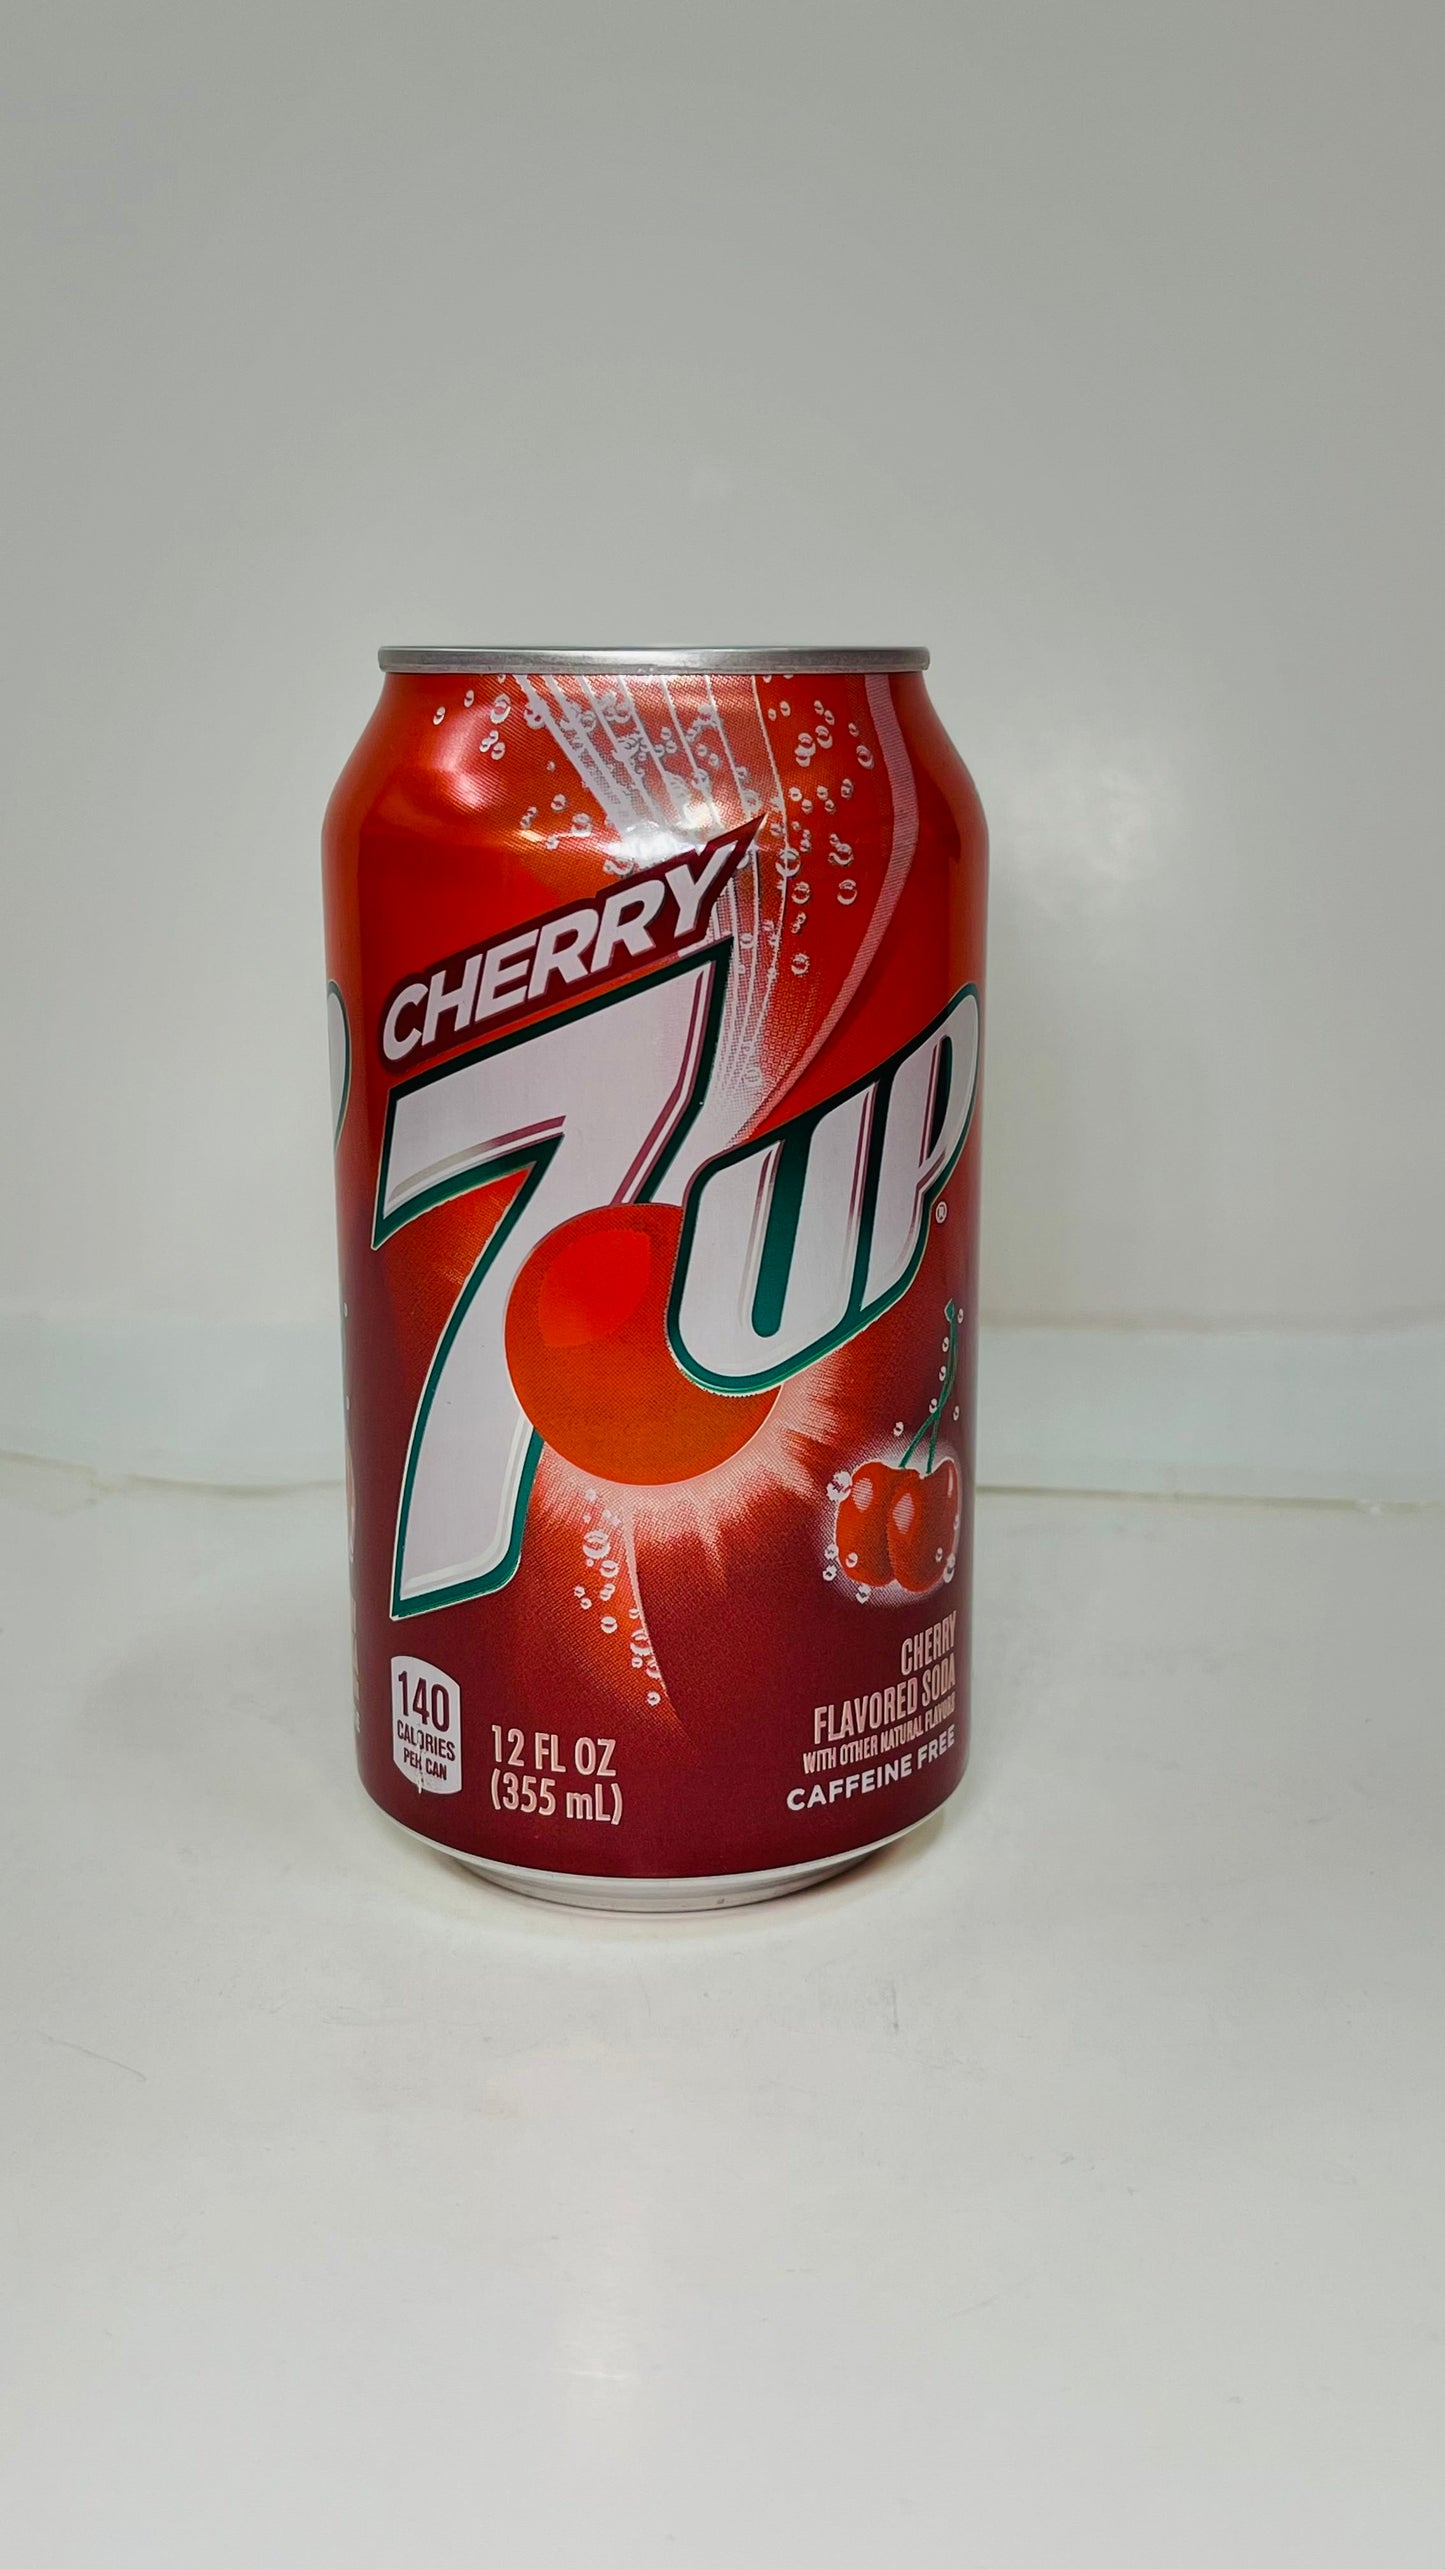 7 UP Cherry Soda